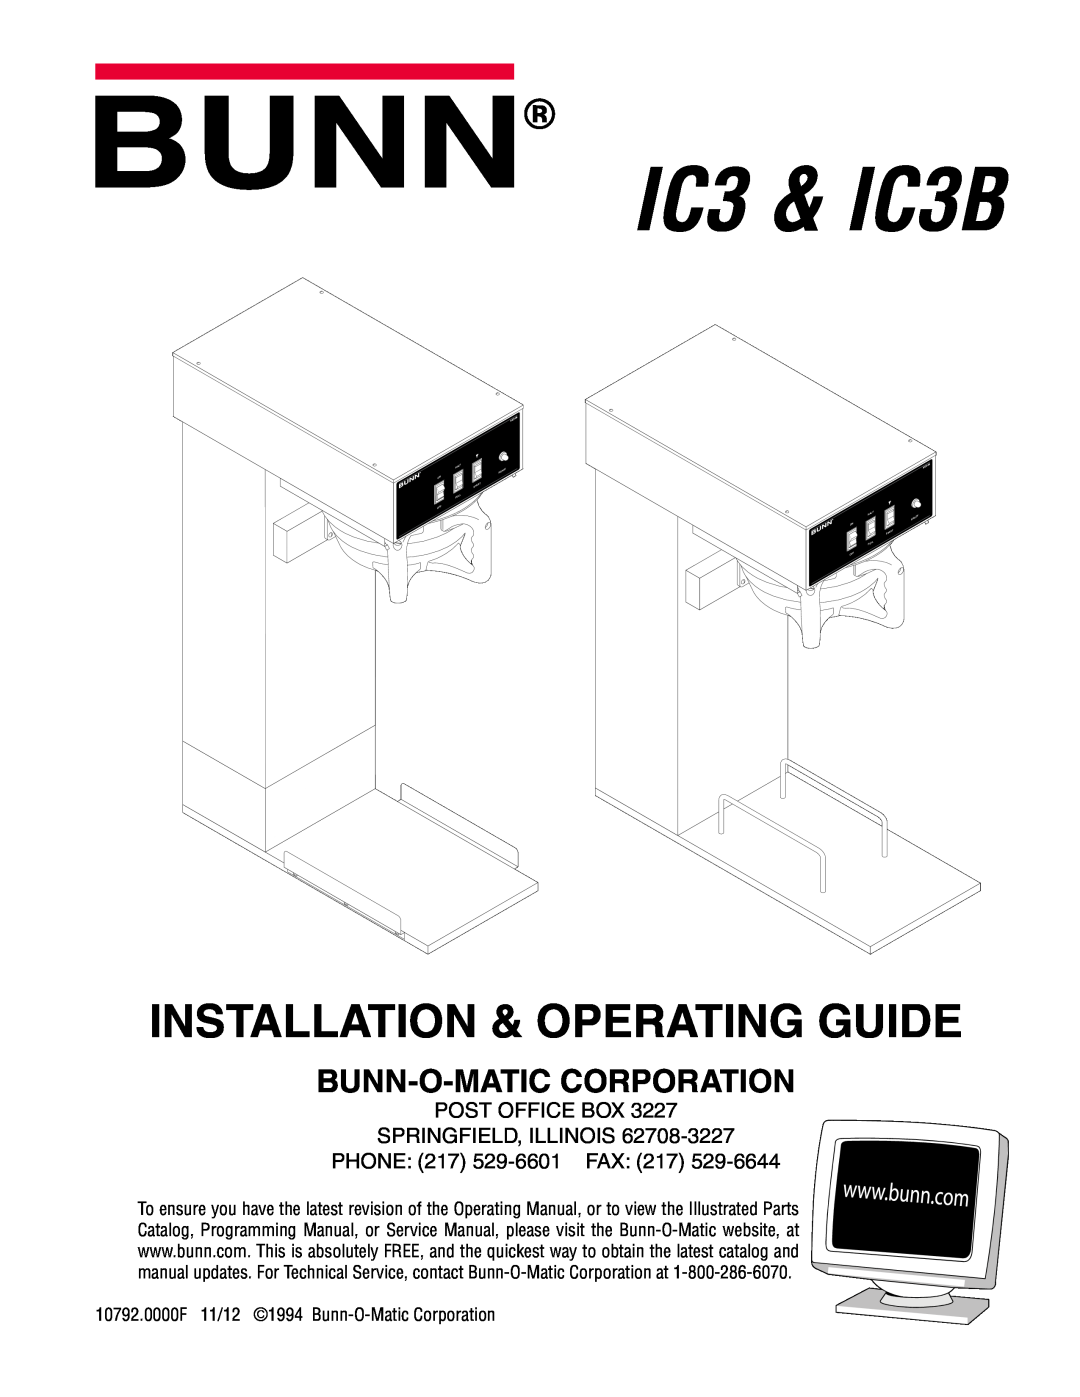 Bunn warranty Bunn-O-Maticcorporation, Introduction, Warranty, Post Office Box Springfield, Illinois, IC3 & IC3B 